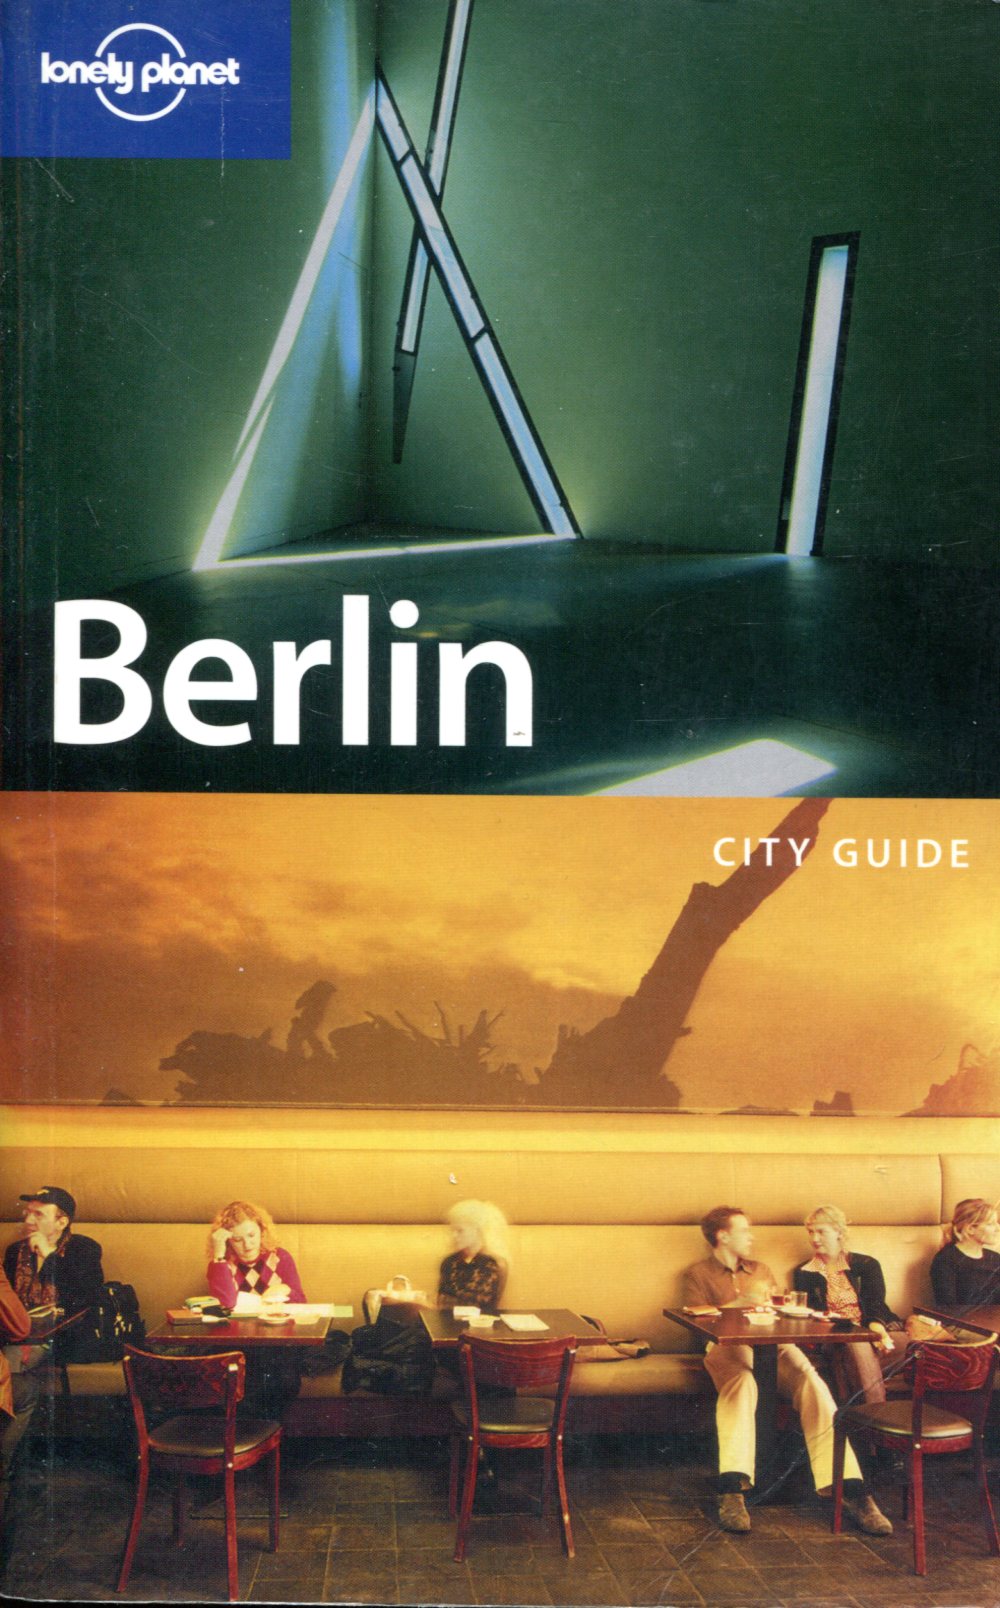 Berlín city guide - Lonlely planet